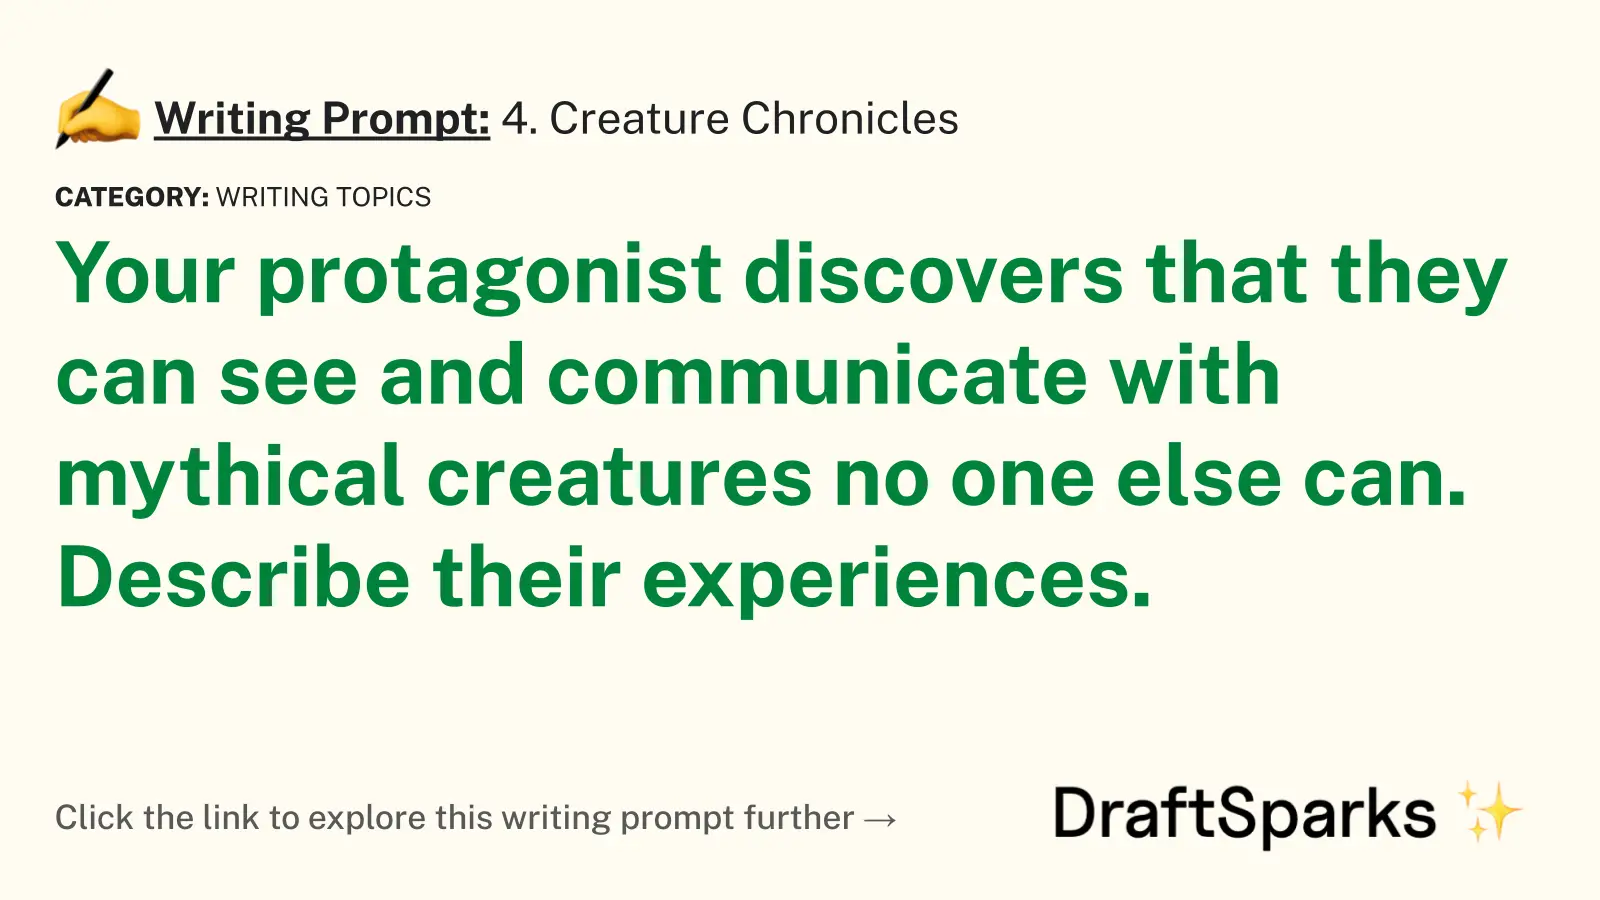 4. Creature Chronicles